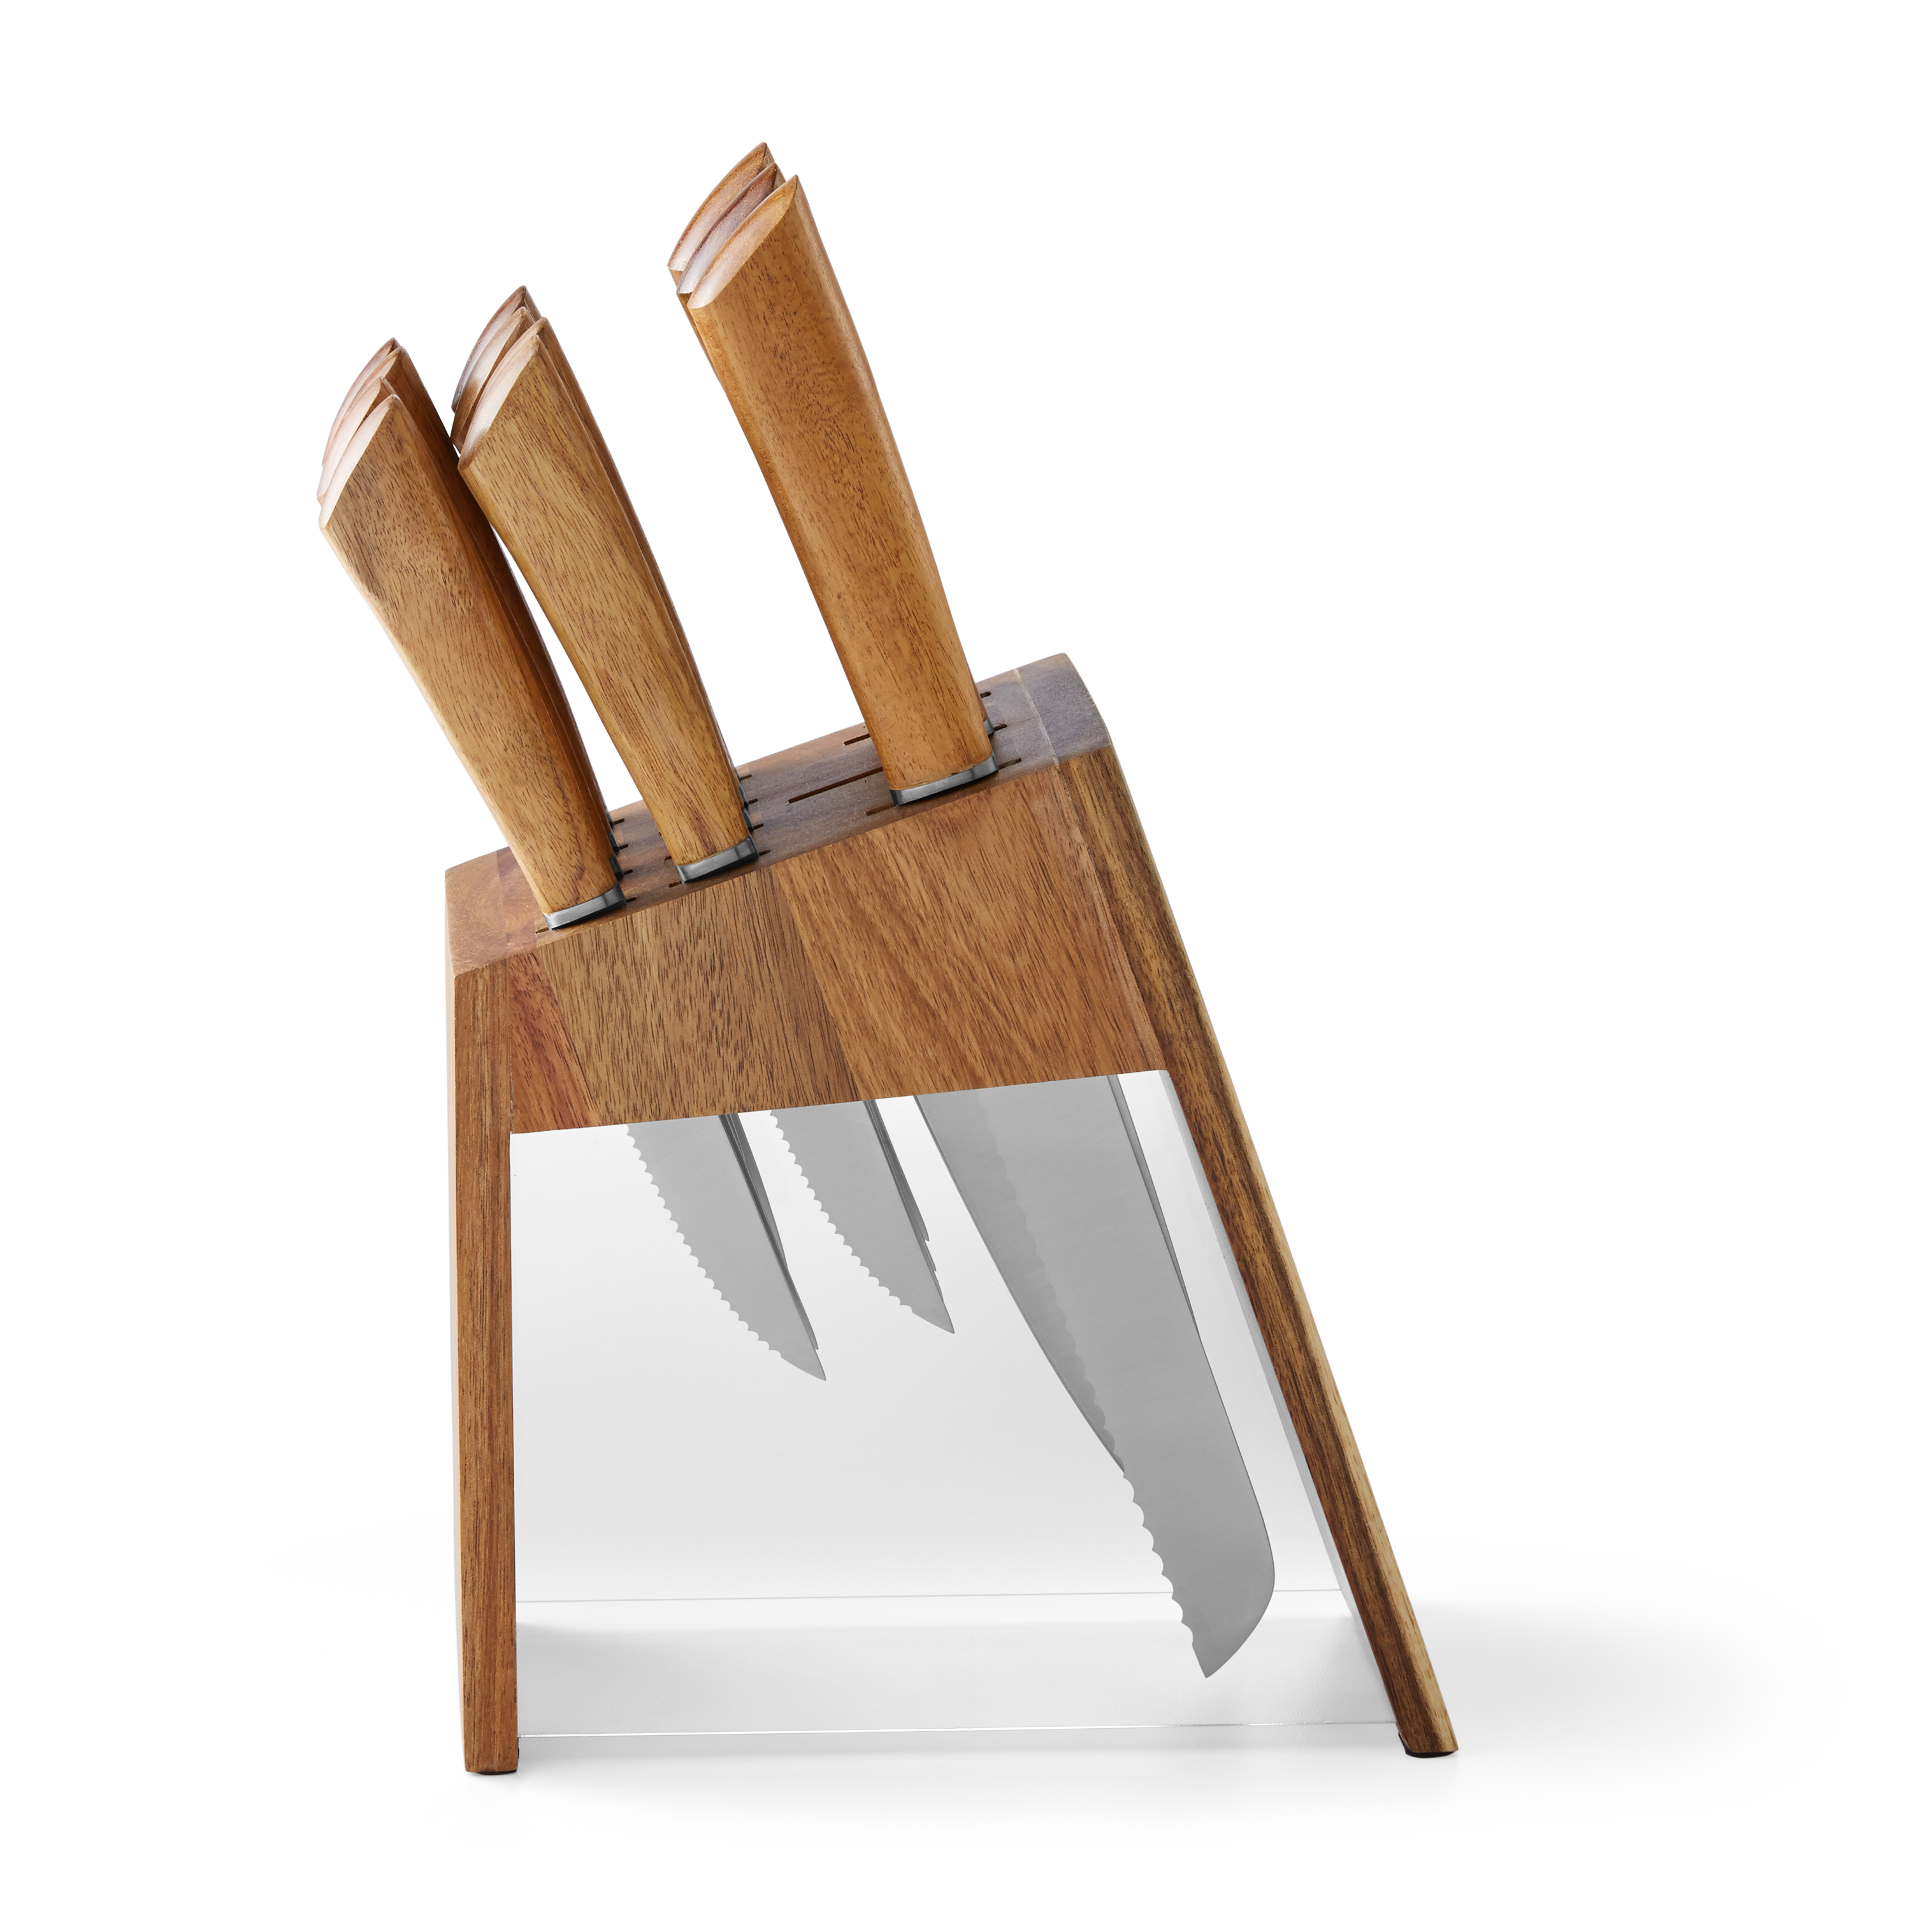 12-Piece Acacia Handle Knife Set with Acacia Wood and Acrylic Block - image 4 of 4